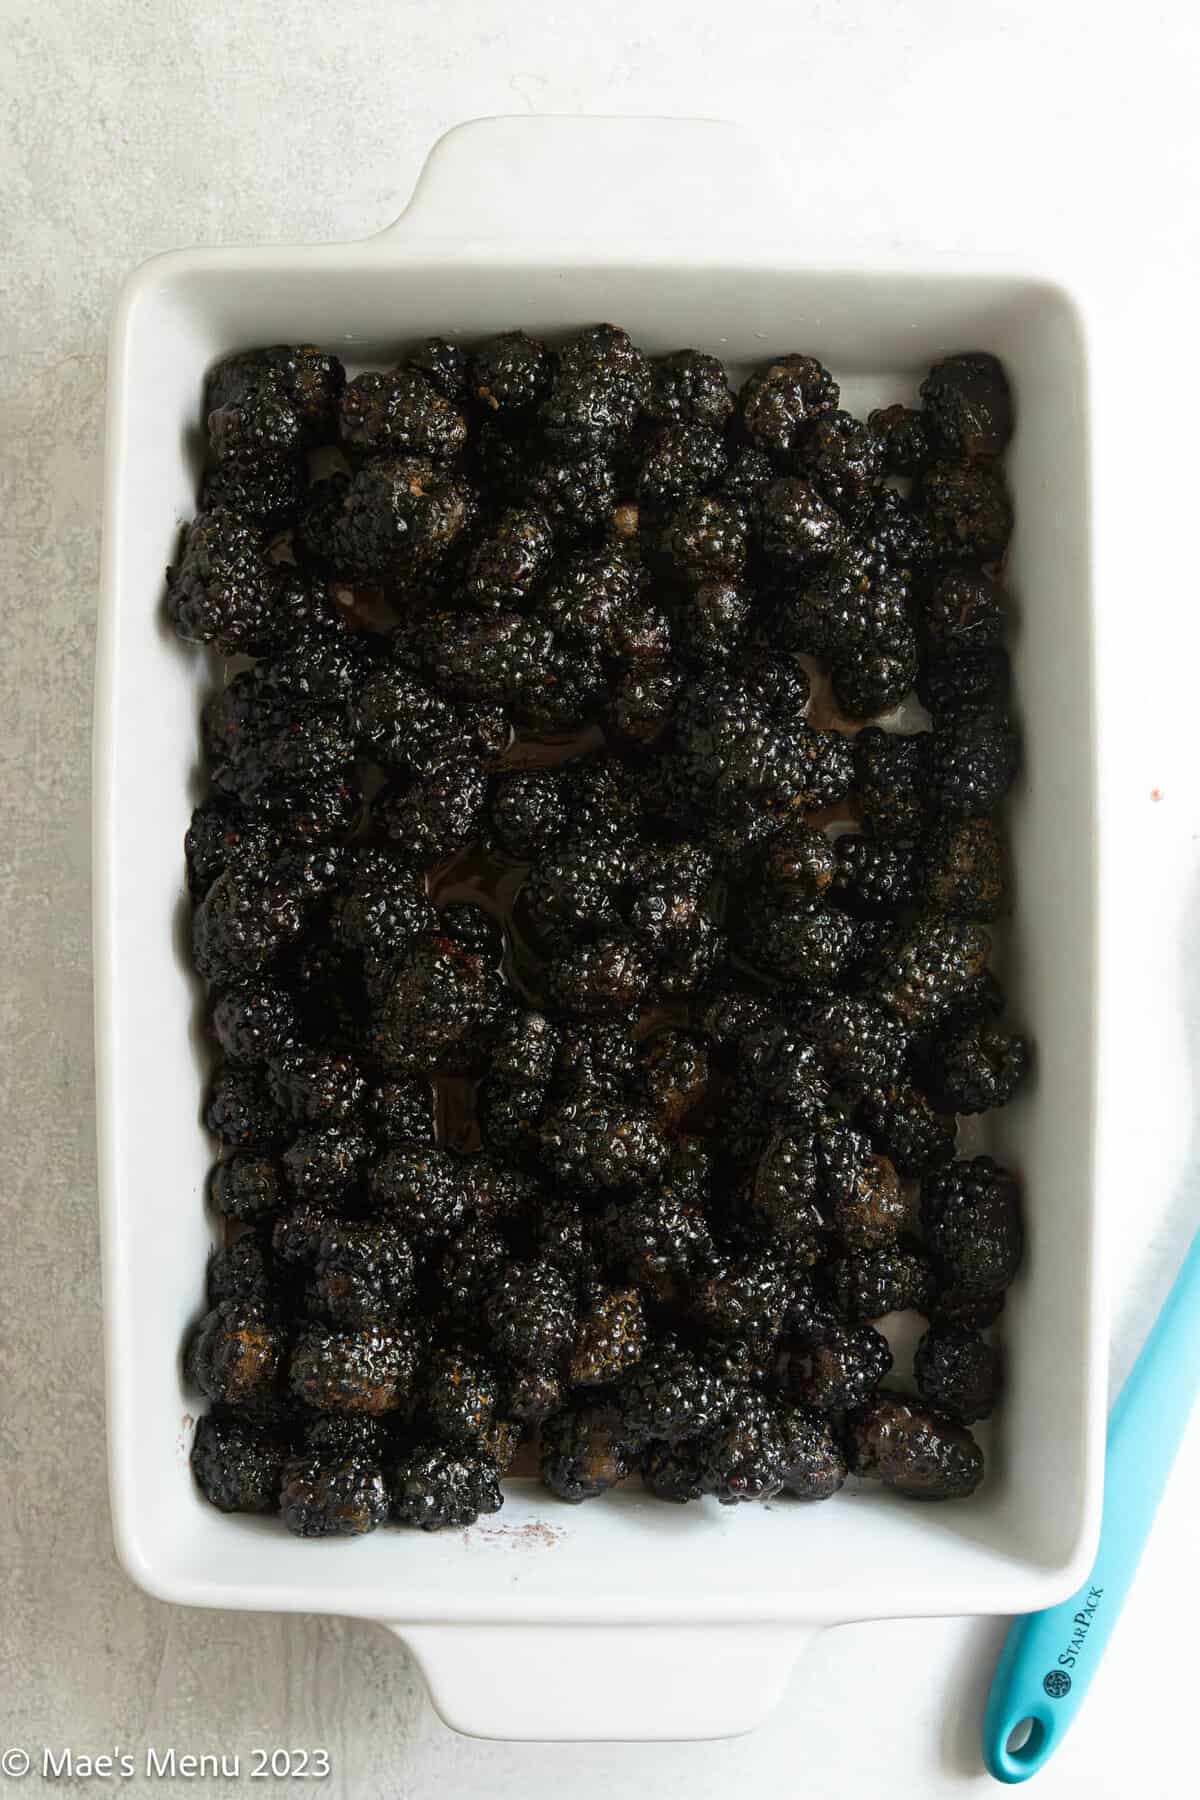 Seasoned blackberries in a white ceramic baking pan.